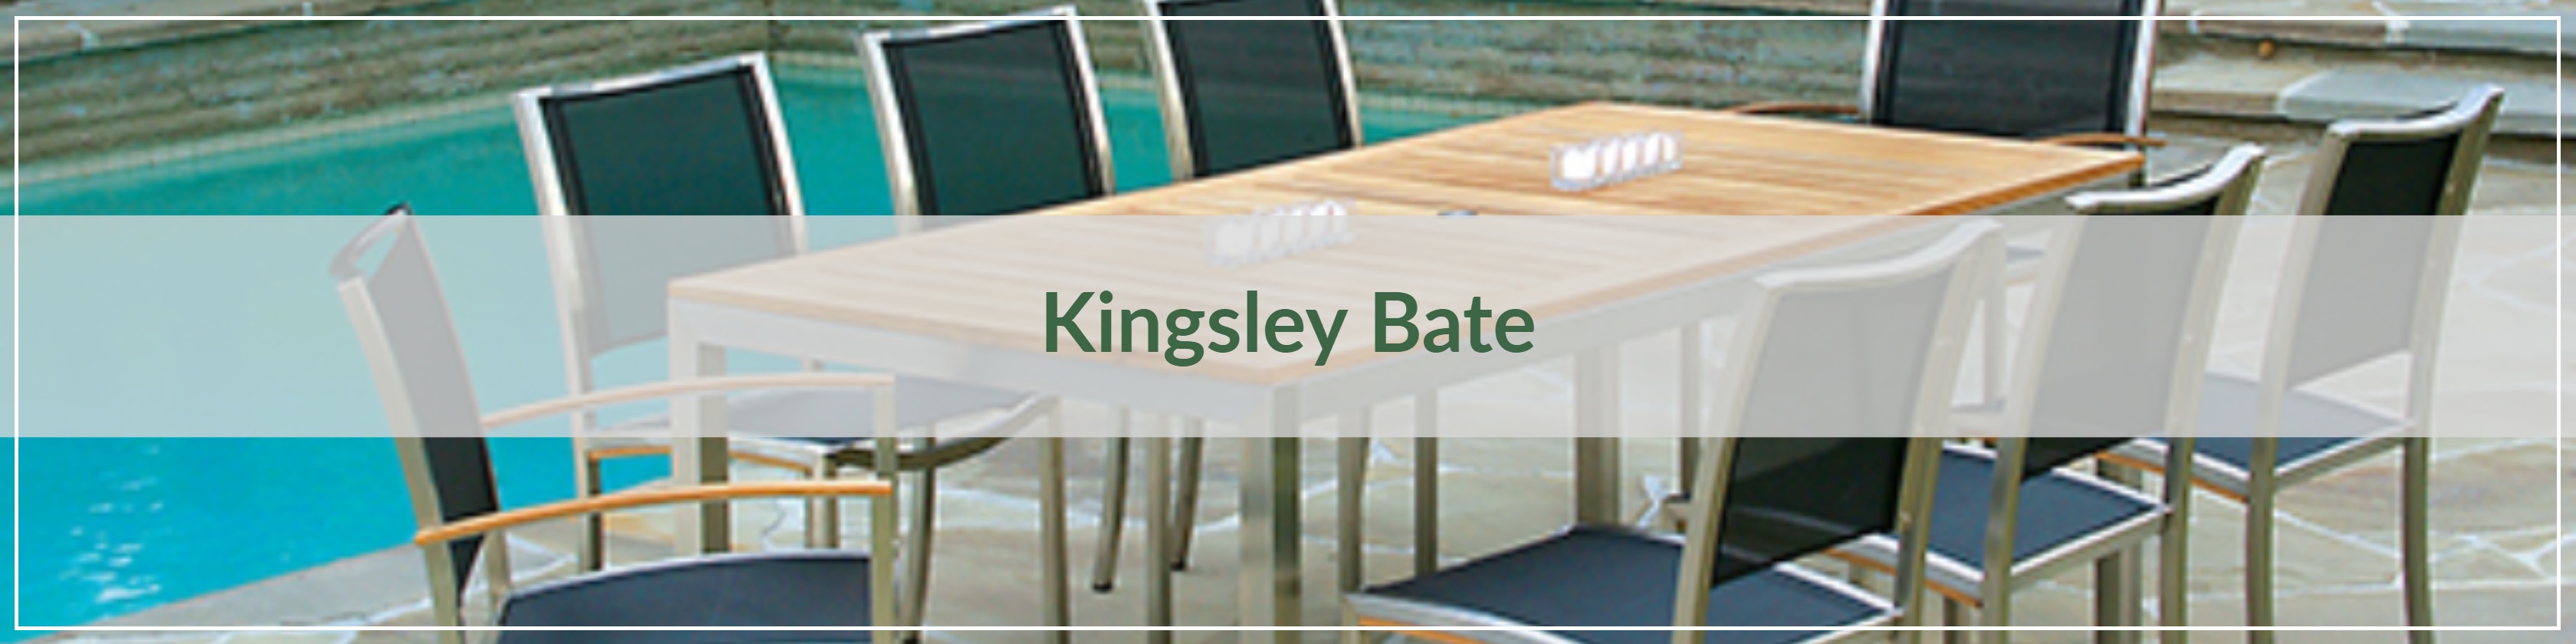 Kingsley Bate Stainless Steel Outdoor Dining